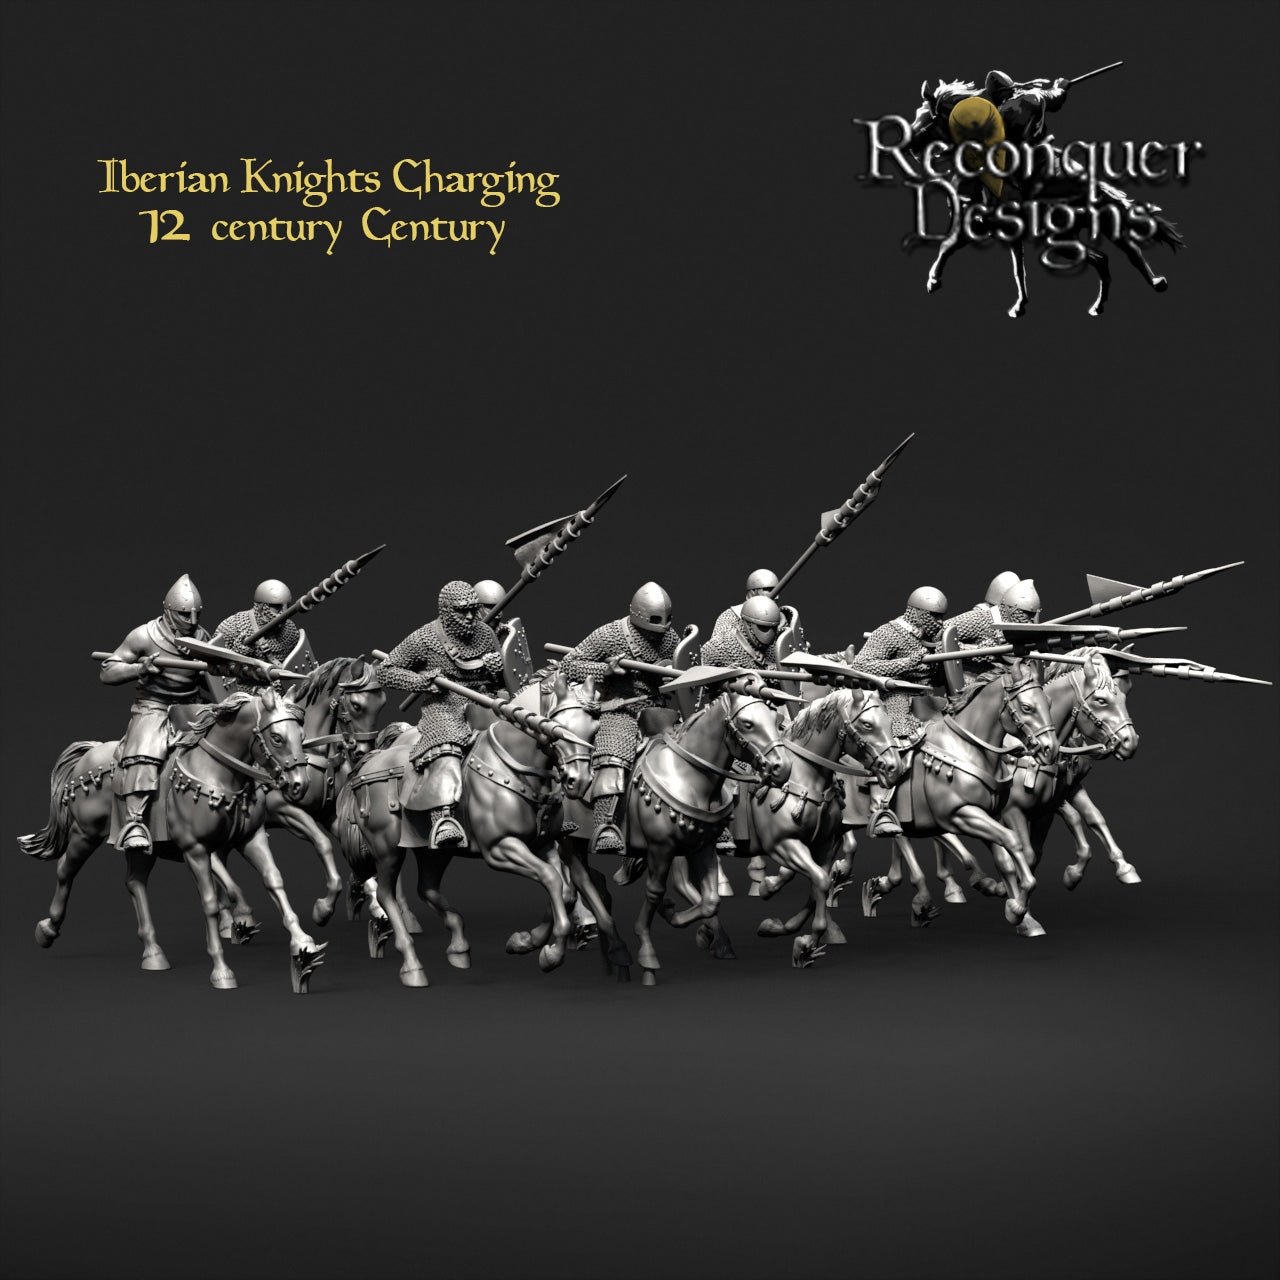 Iberian Knights Charging 12th century.